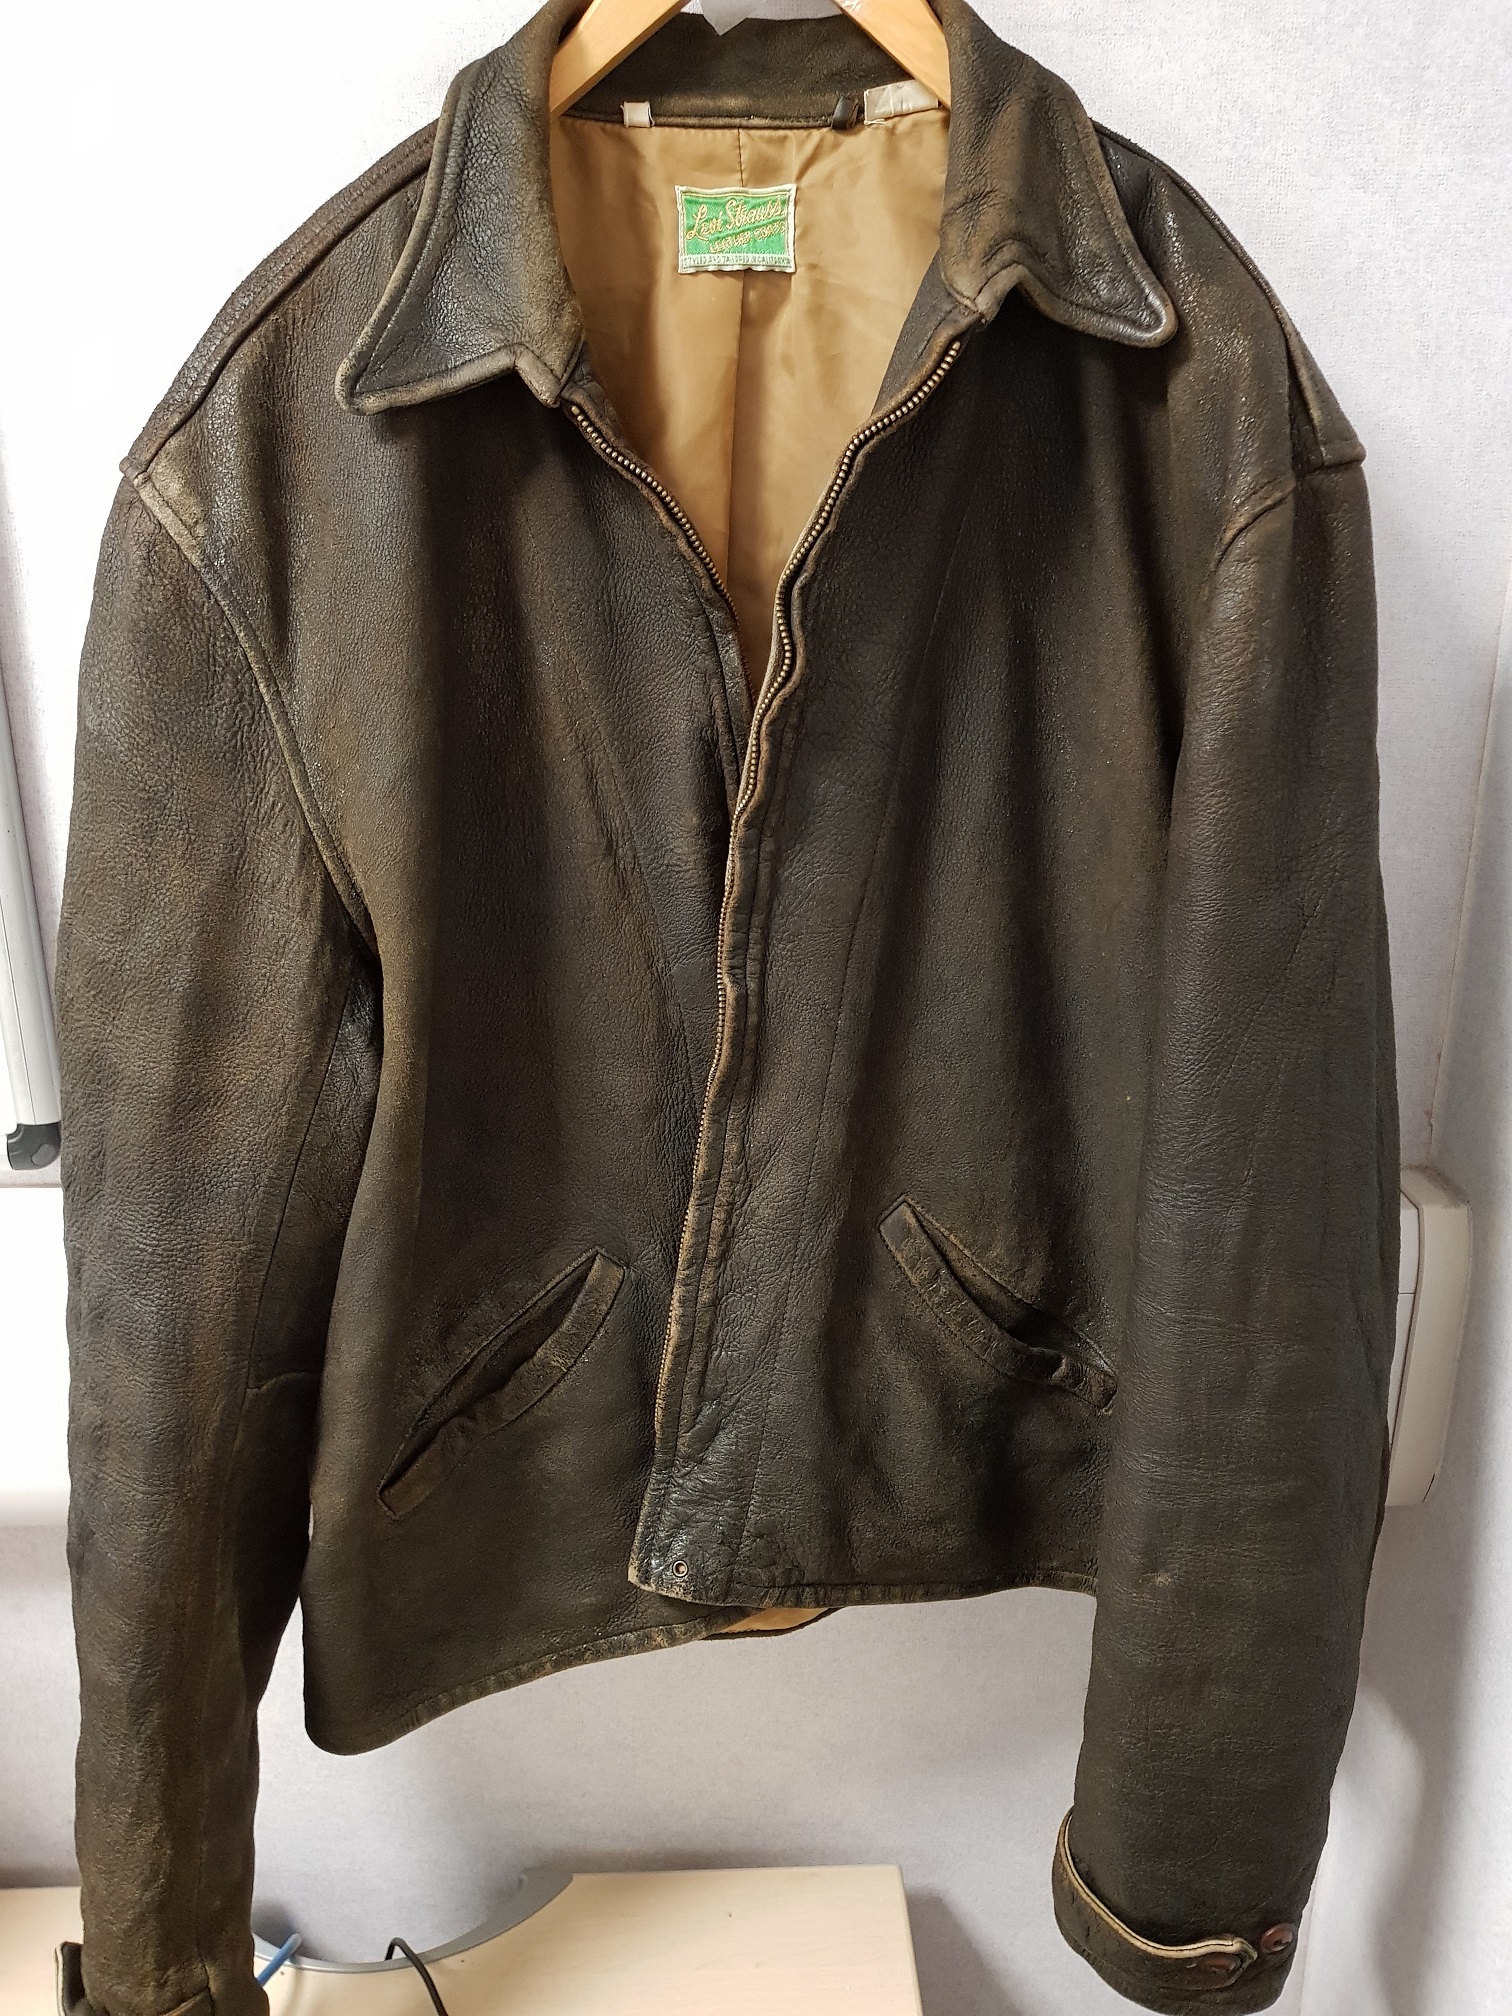 lvc leather jacket